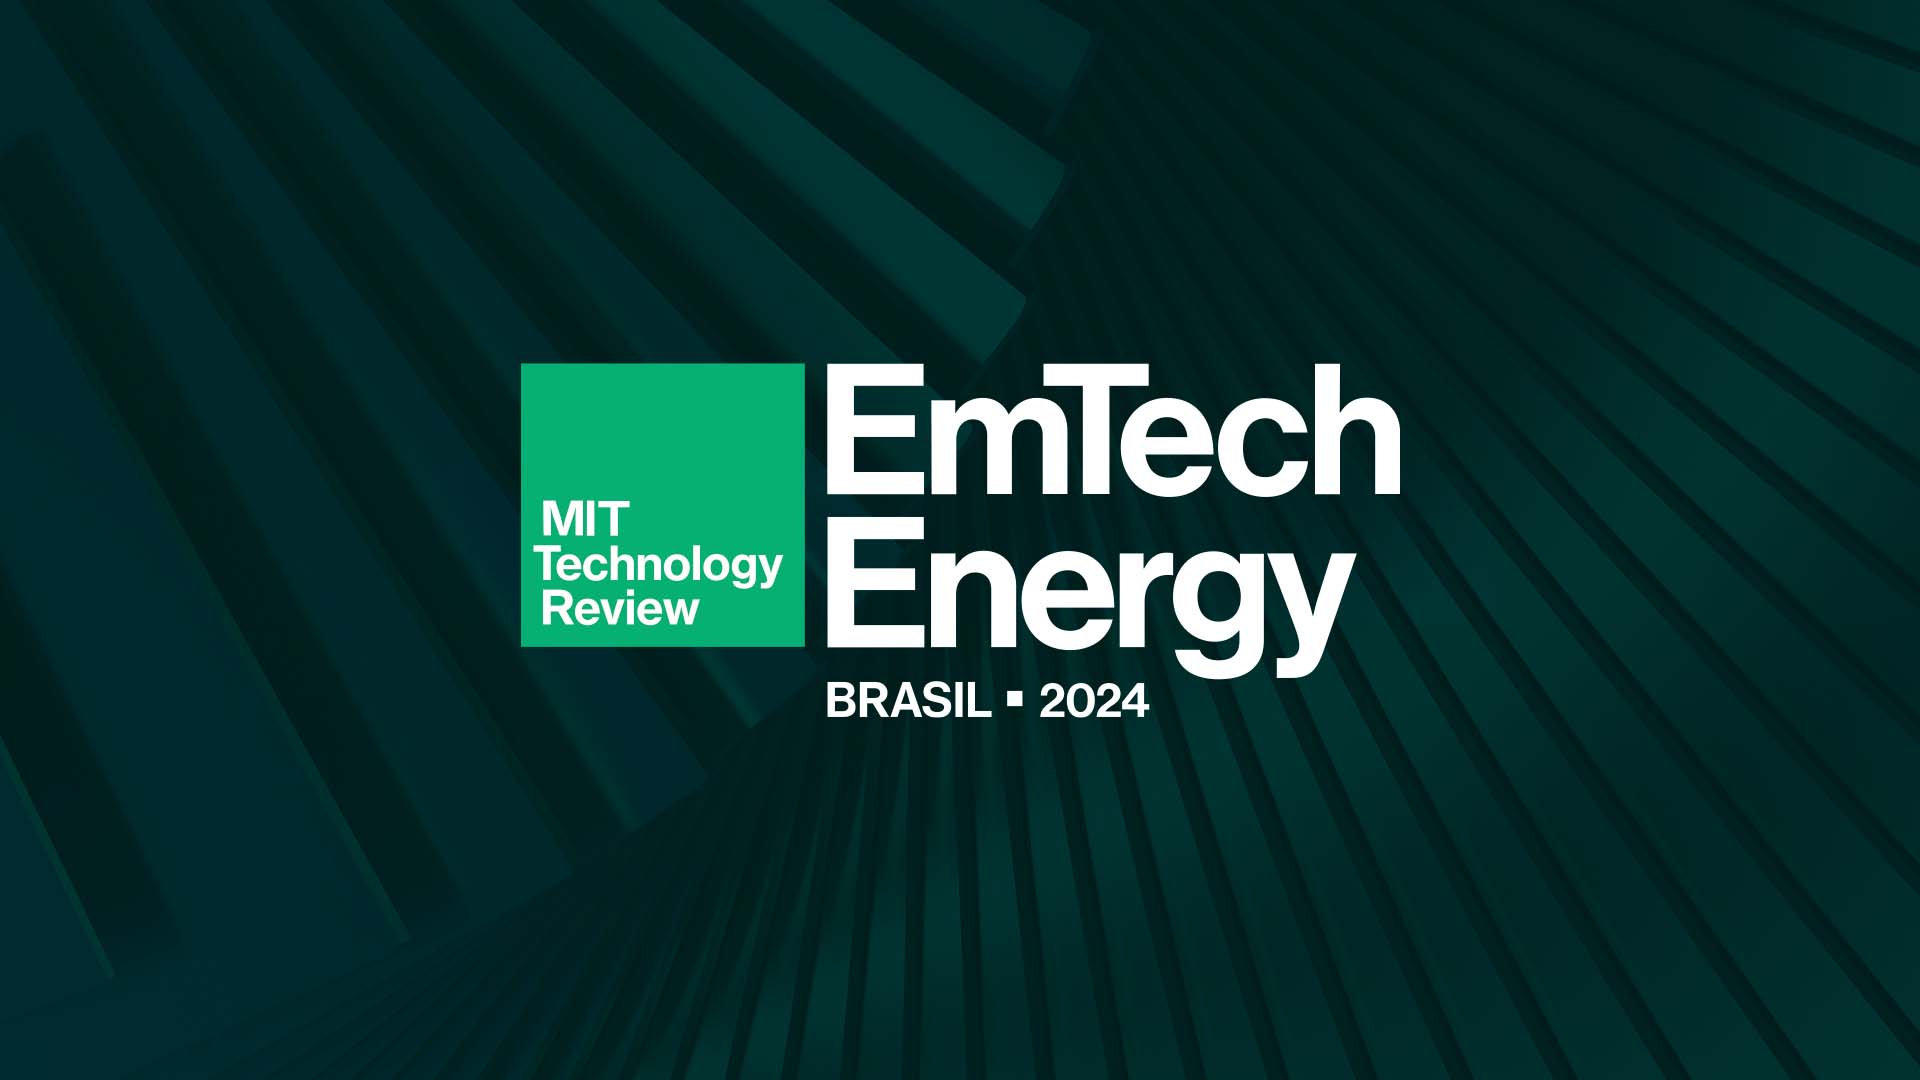 Energy Brasil